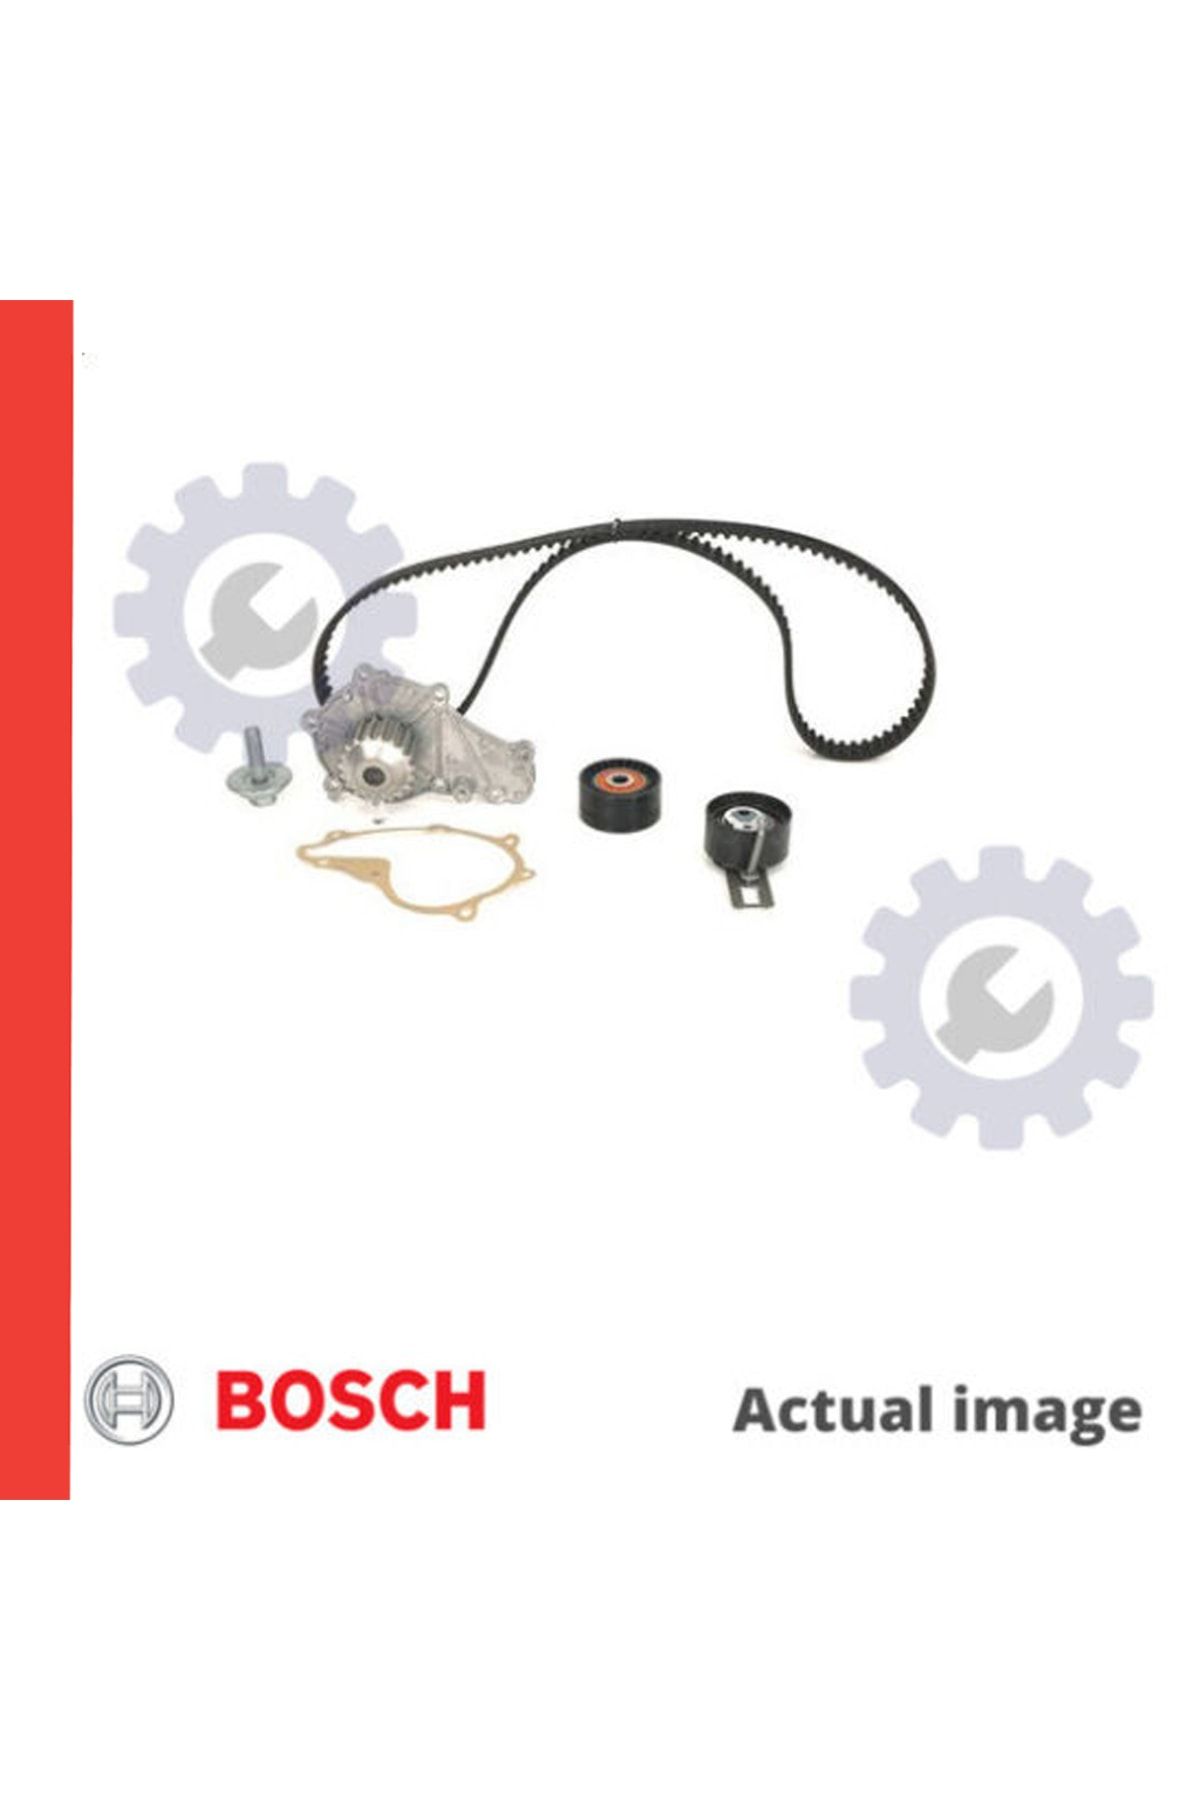 Bosch Citroen C4 Aircross 1.6 Hdı Triger Seti 2012-2017